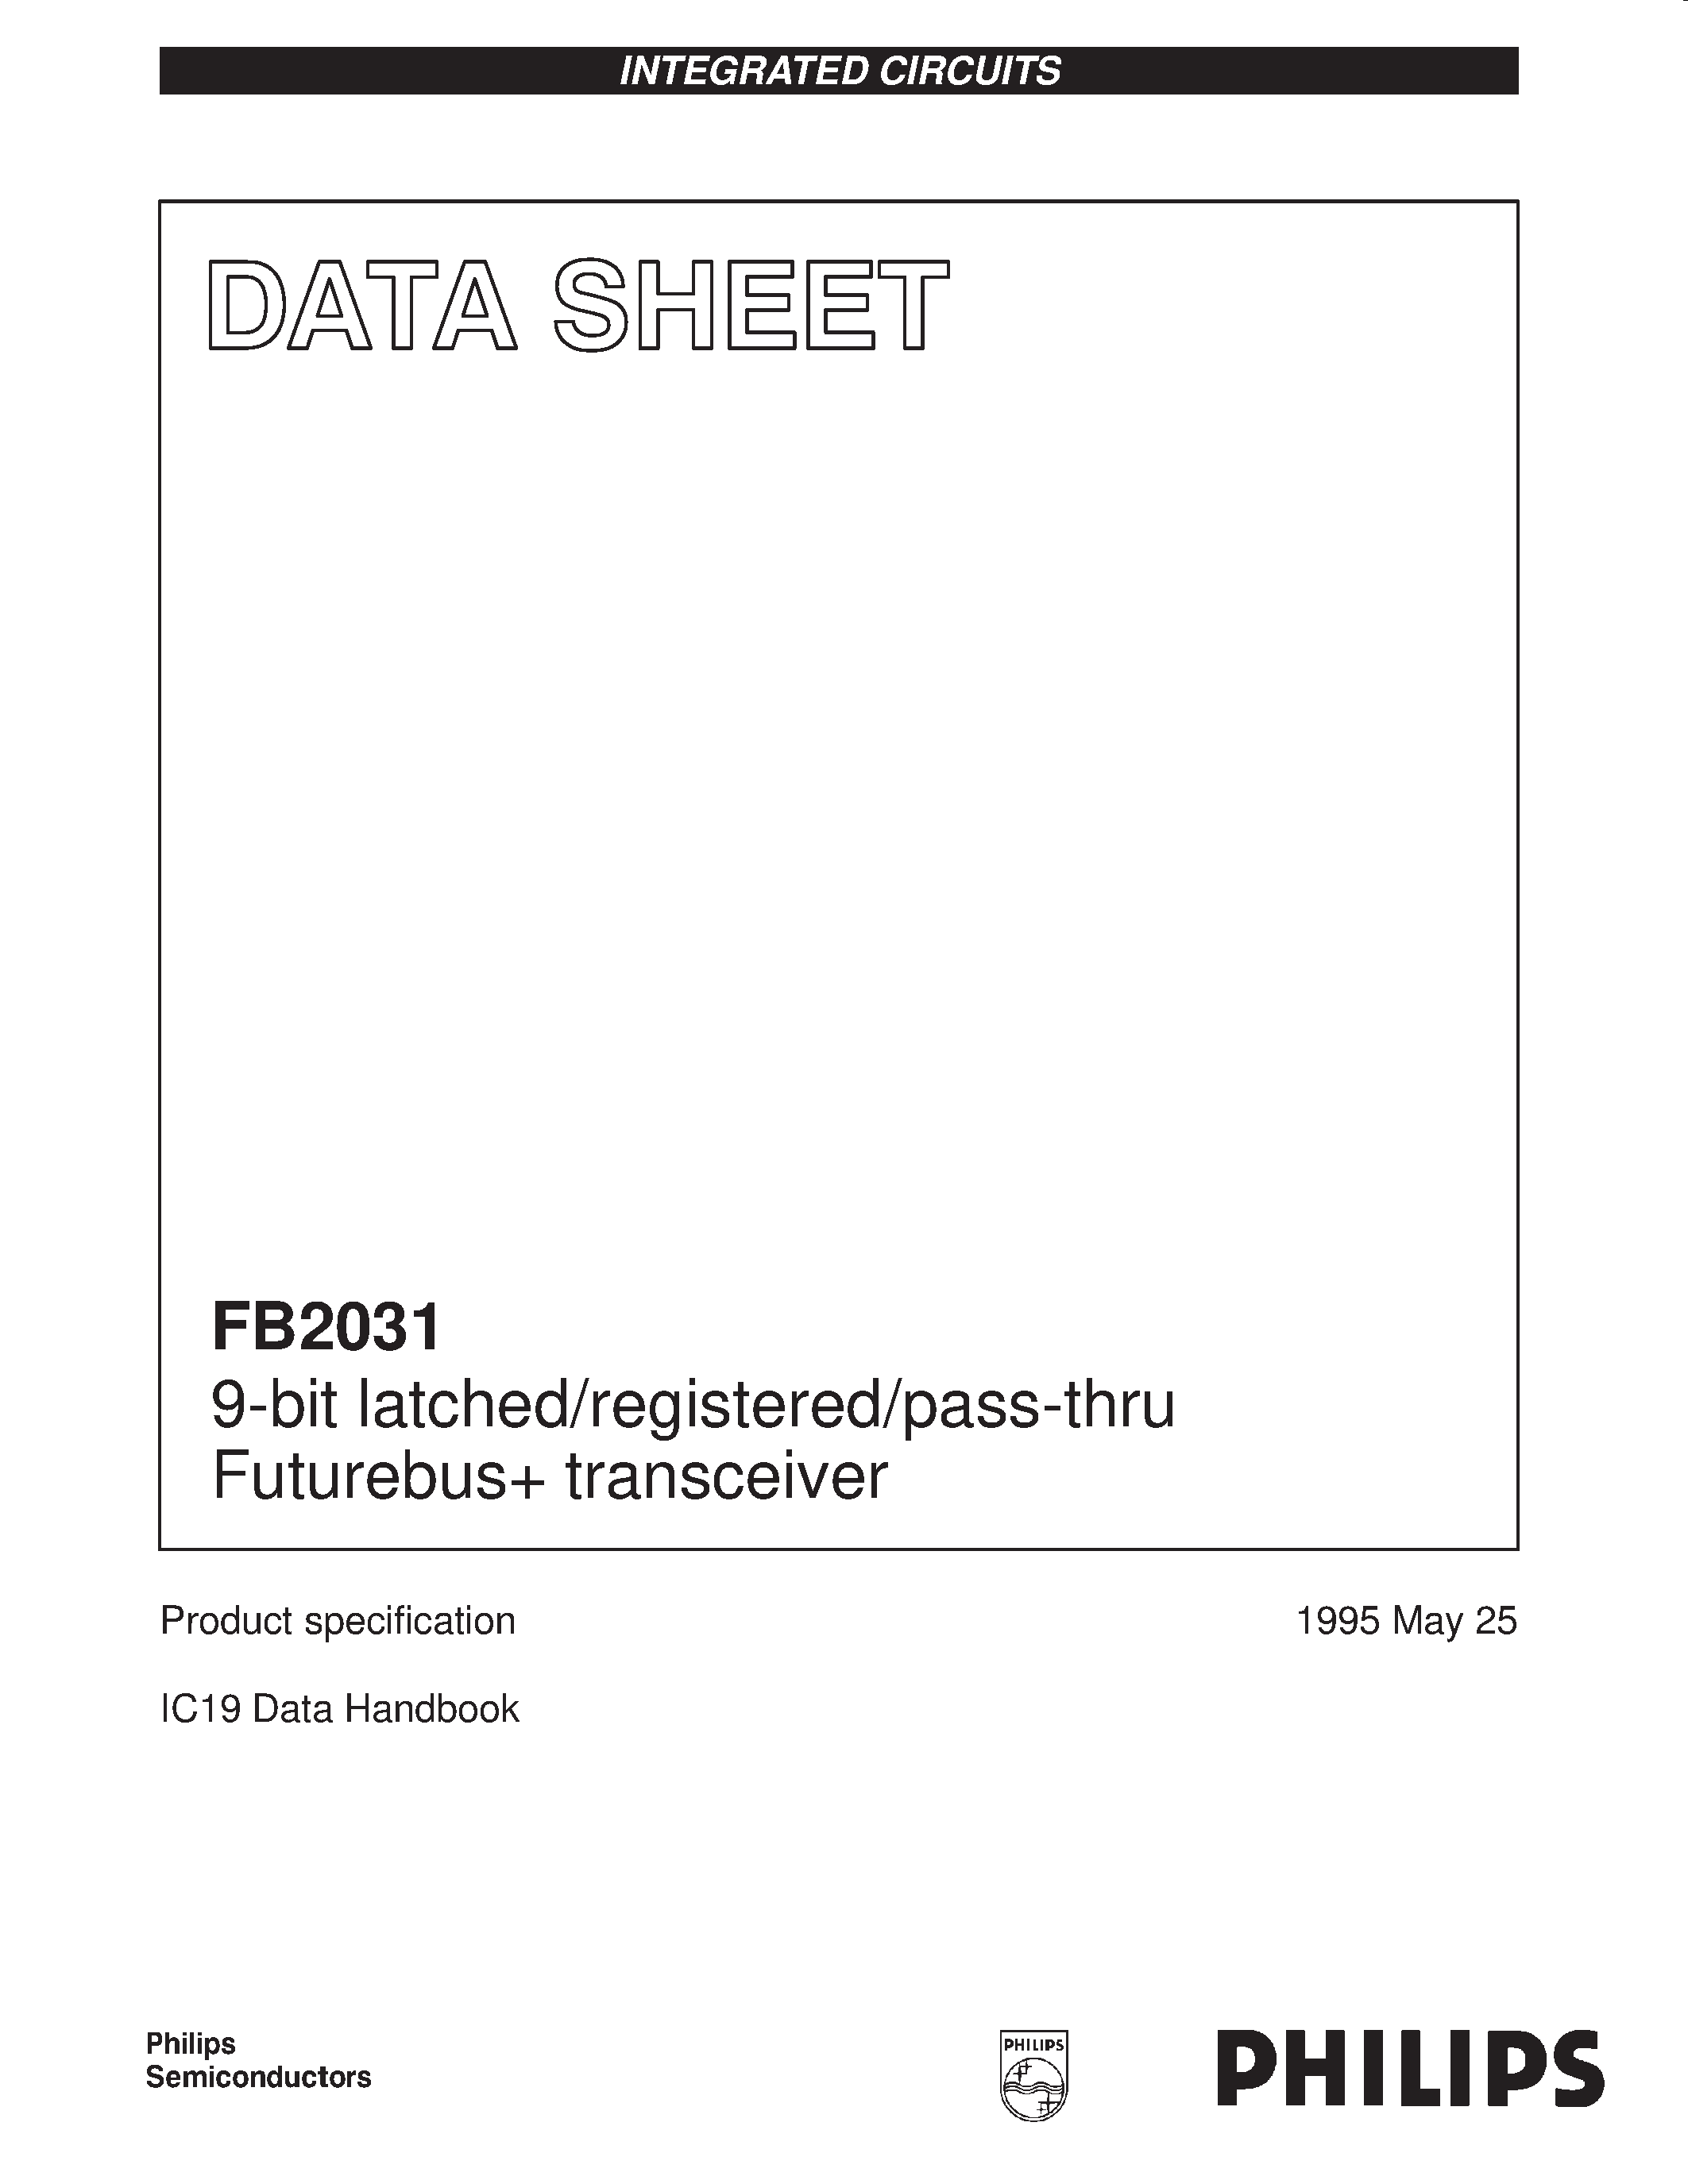 Даташит CD3206BB - 9-bit latched/registered/pass-thru Futurebus transceiver страница 1